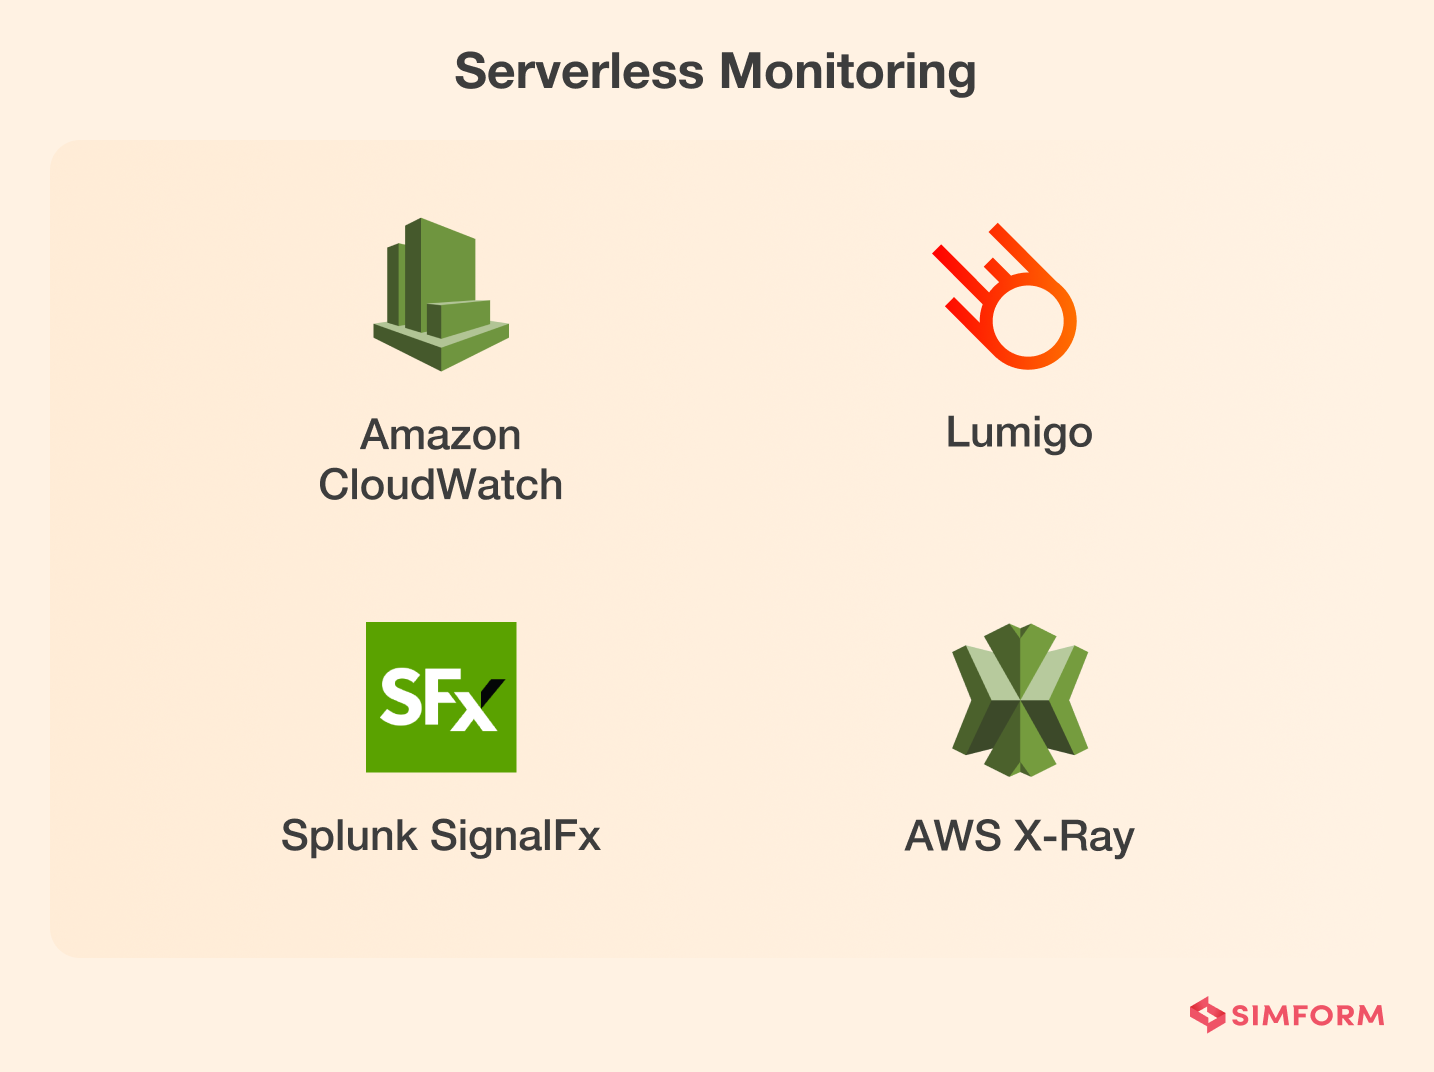 Serverless monitoring